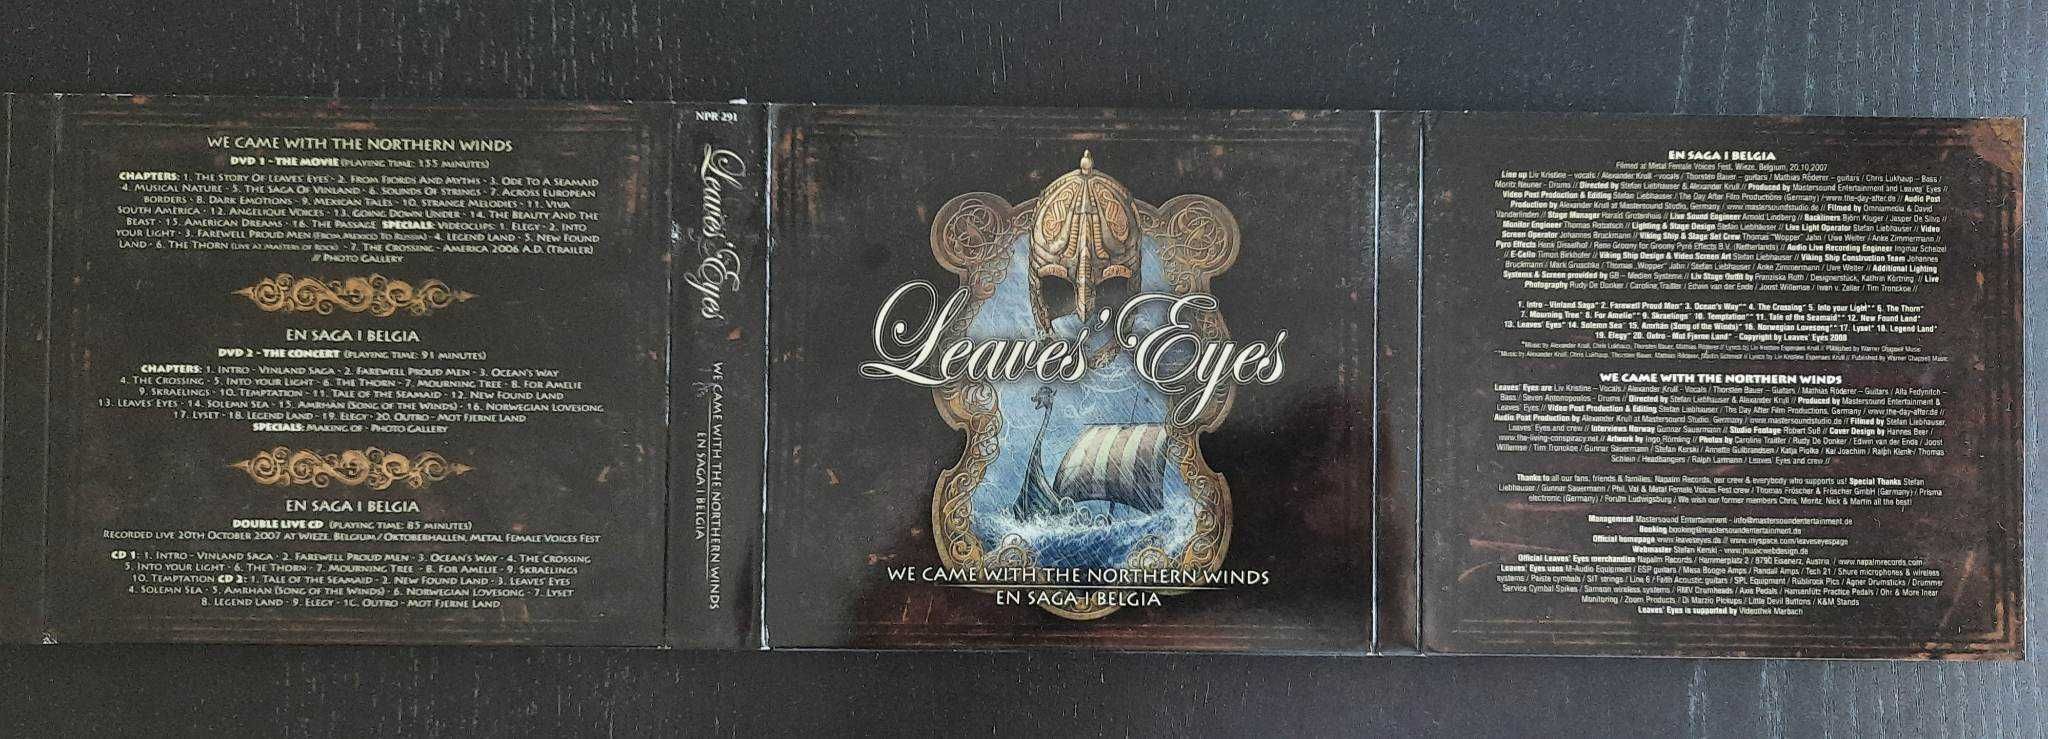 Leaves Eyes-We Came with the Northern Winds/En Saga i Belgia 2CD/2DVD